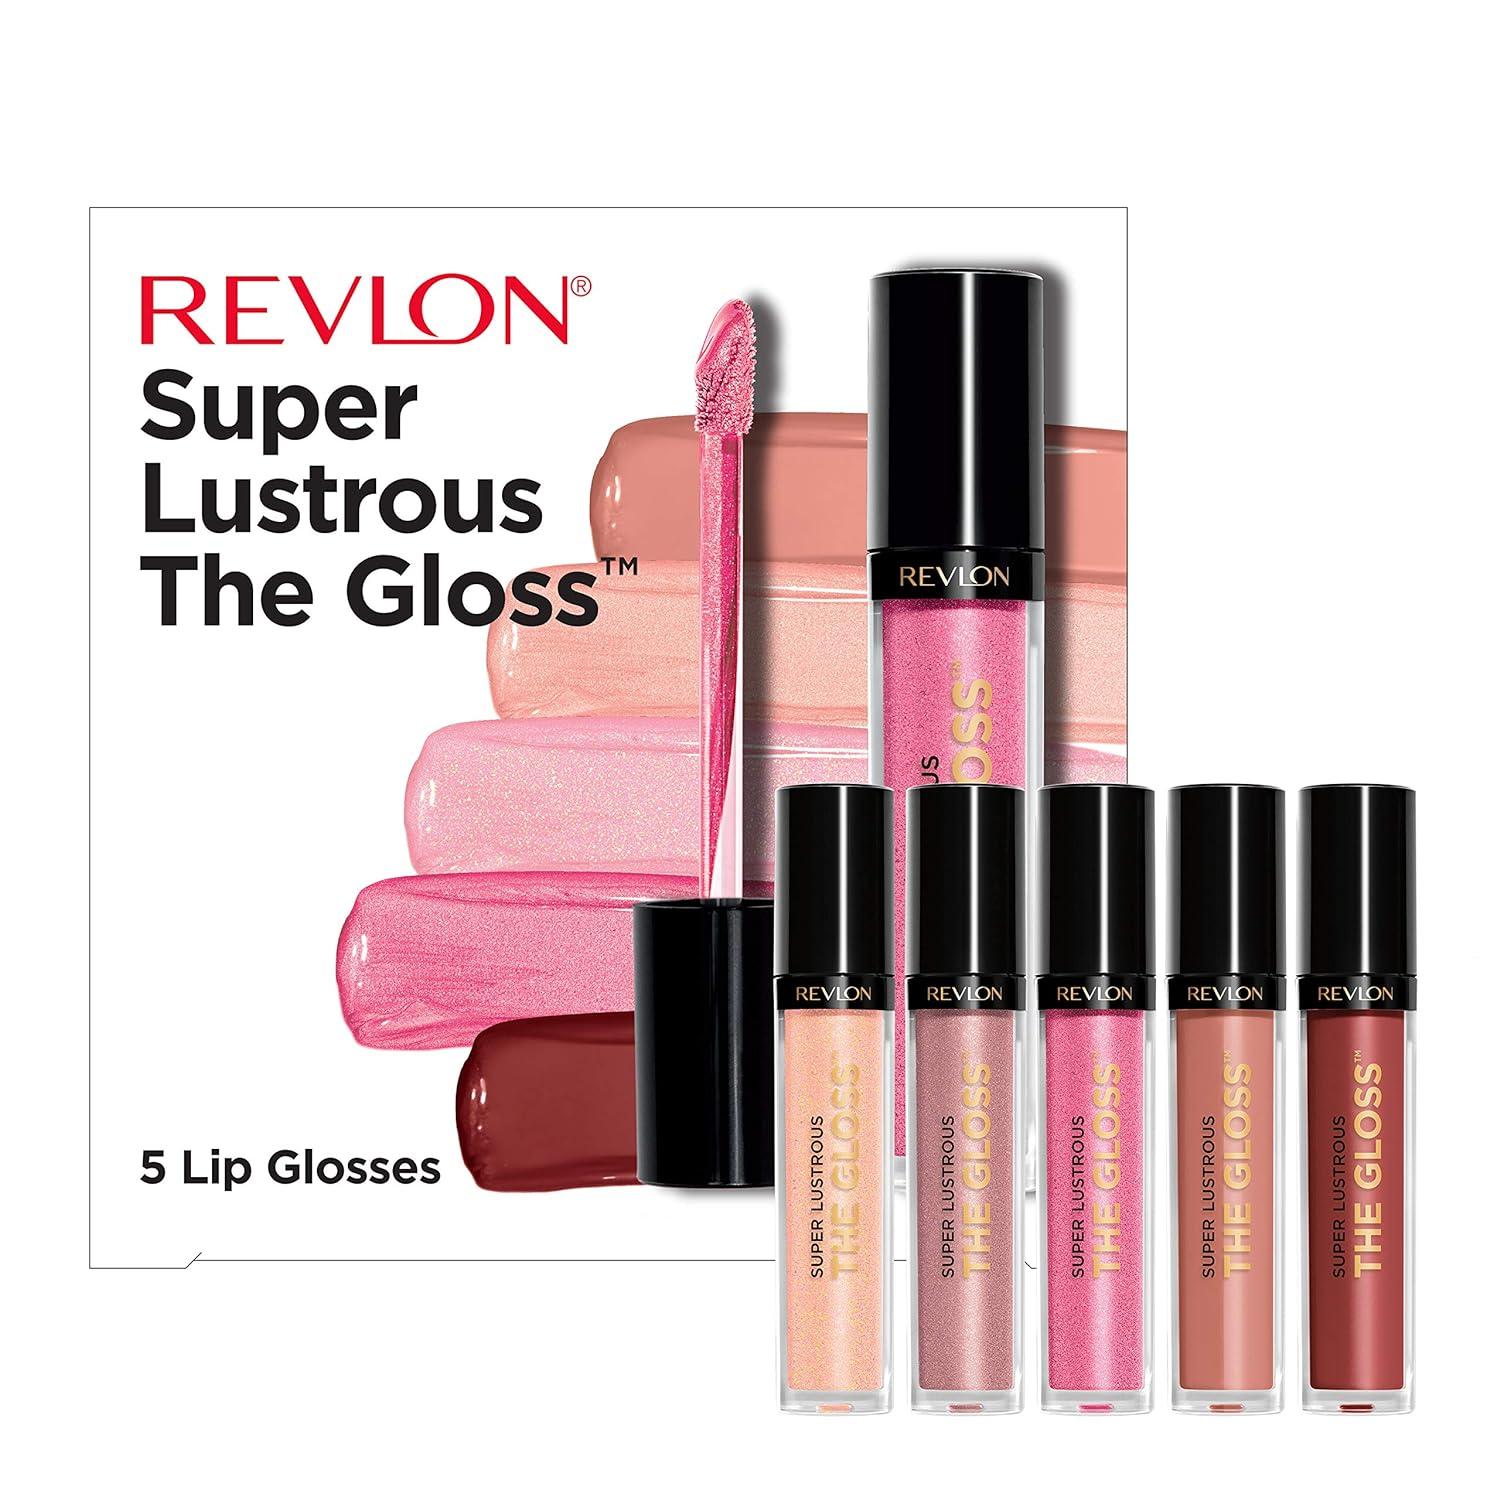 Revlon Super Lustrous Crème, Pearl, Sheer, Matte, Shine, Lipstick